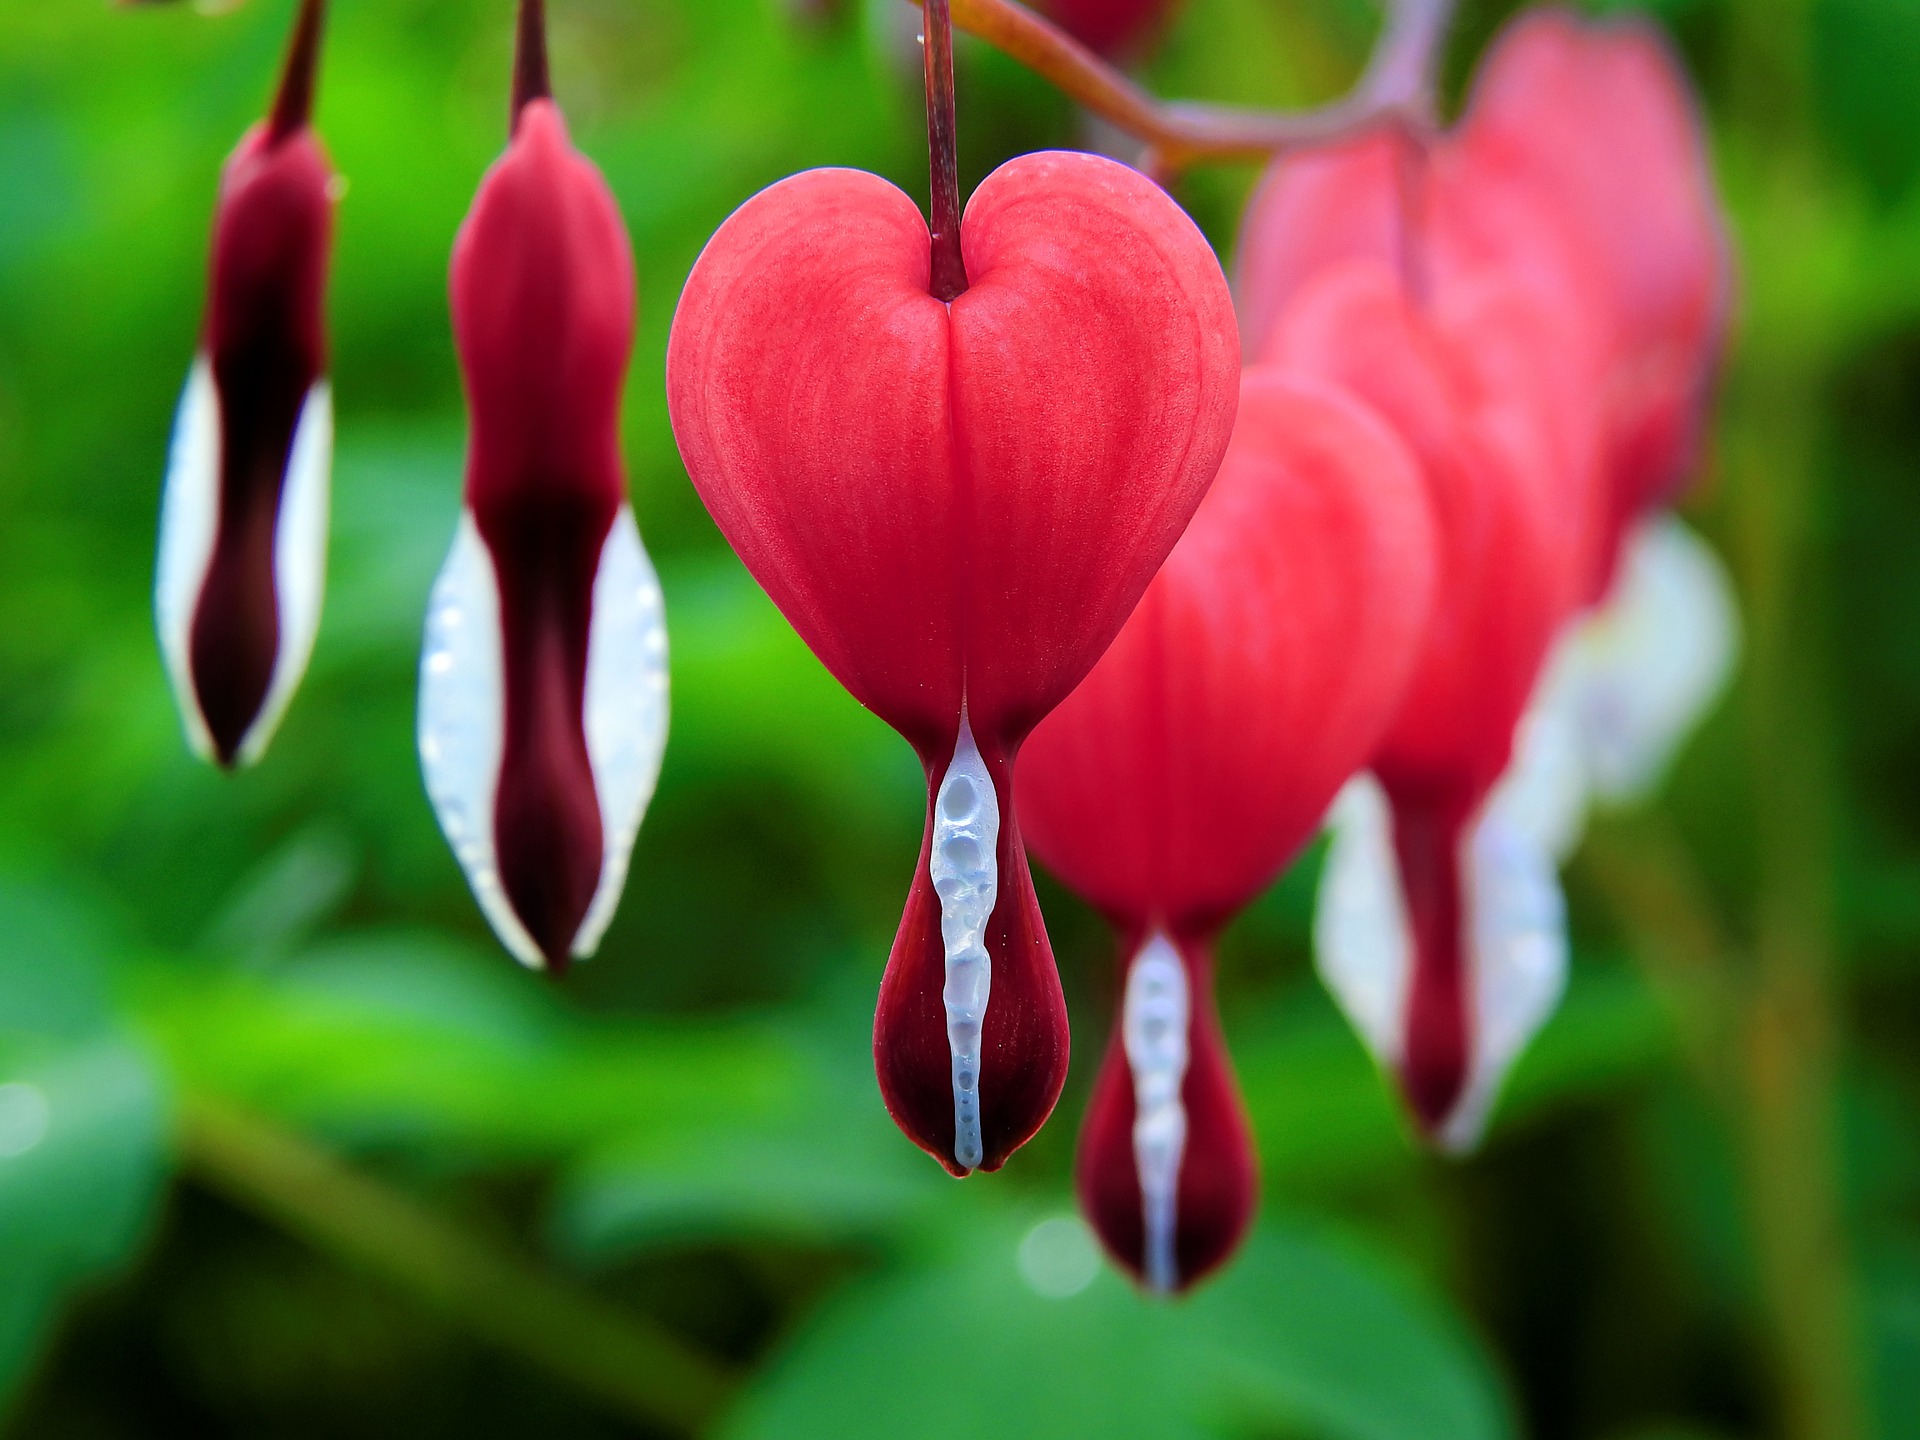 Bleeding Heart is a Beautiful Heart Shaped Flower - Seriously Flowers